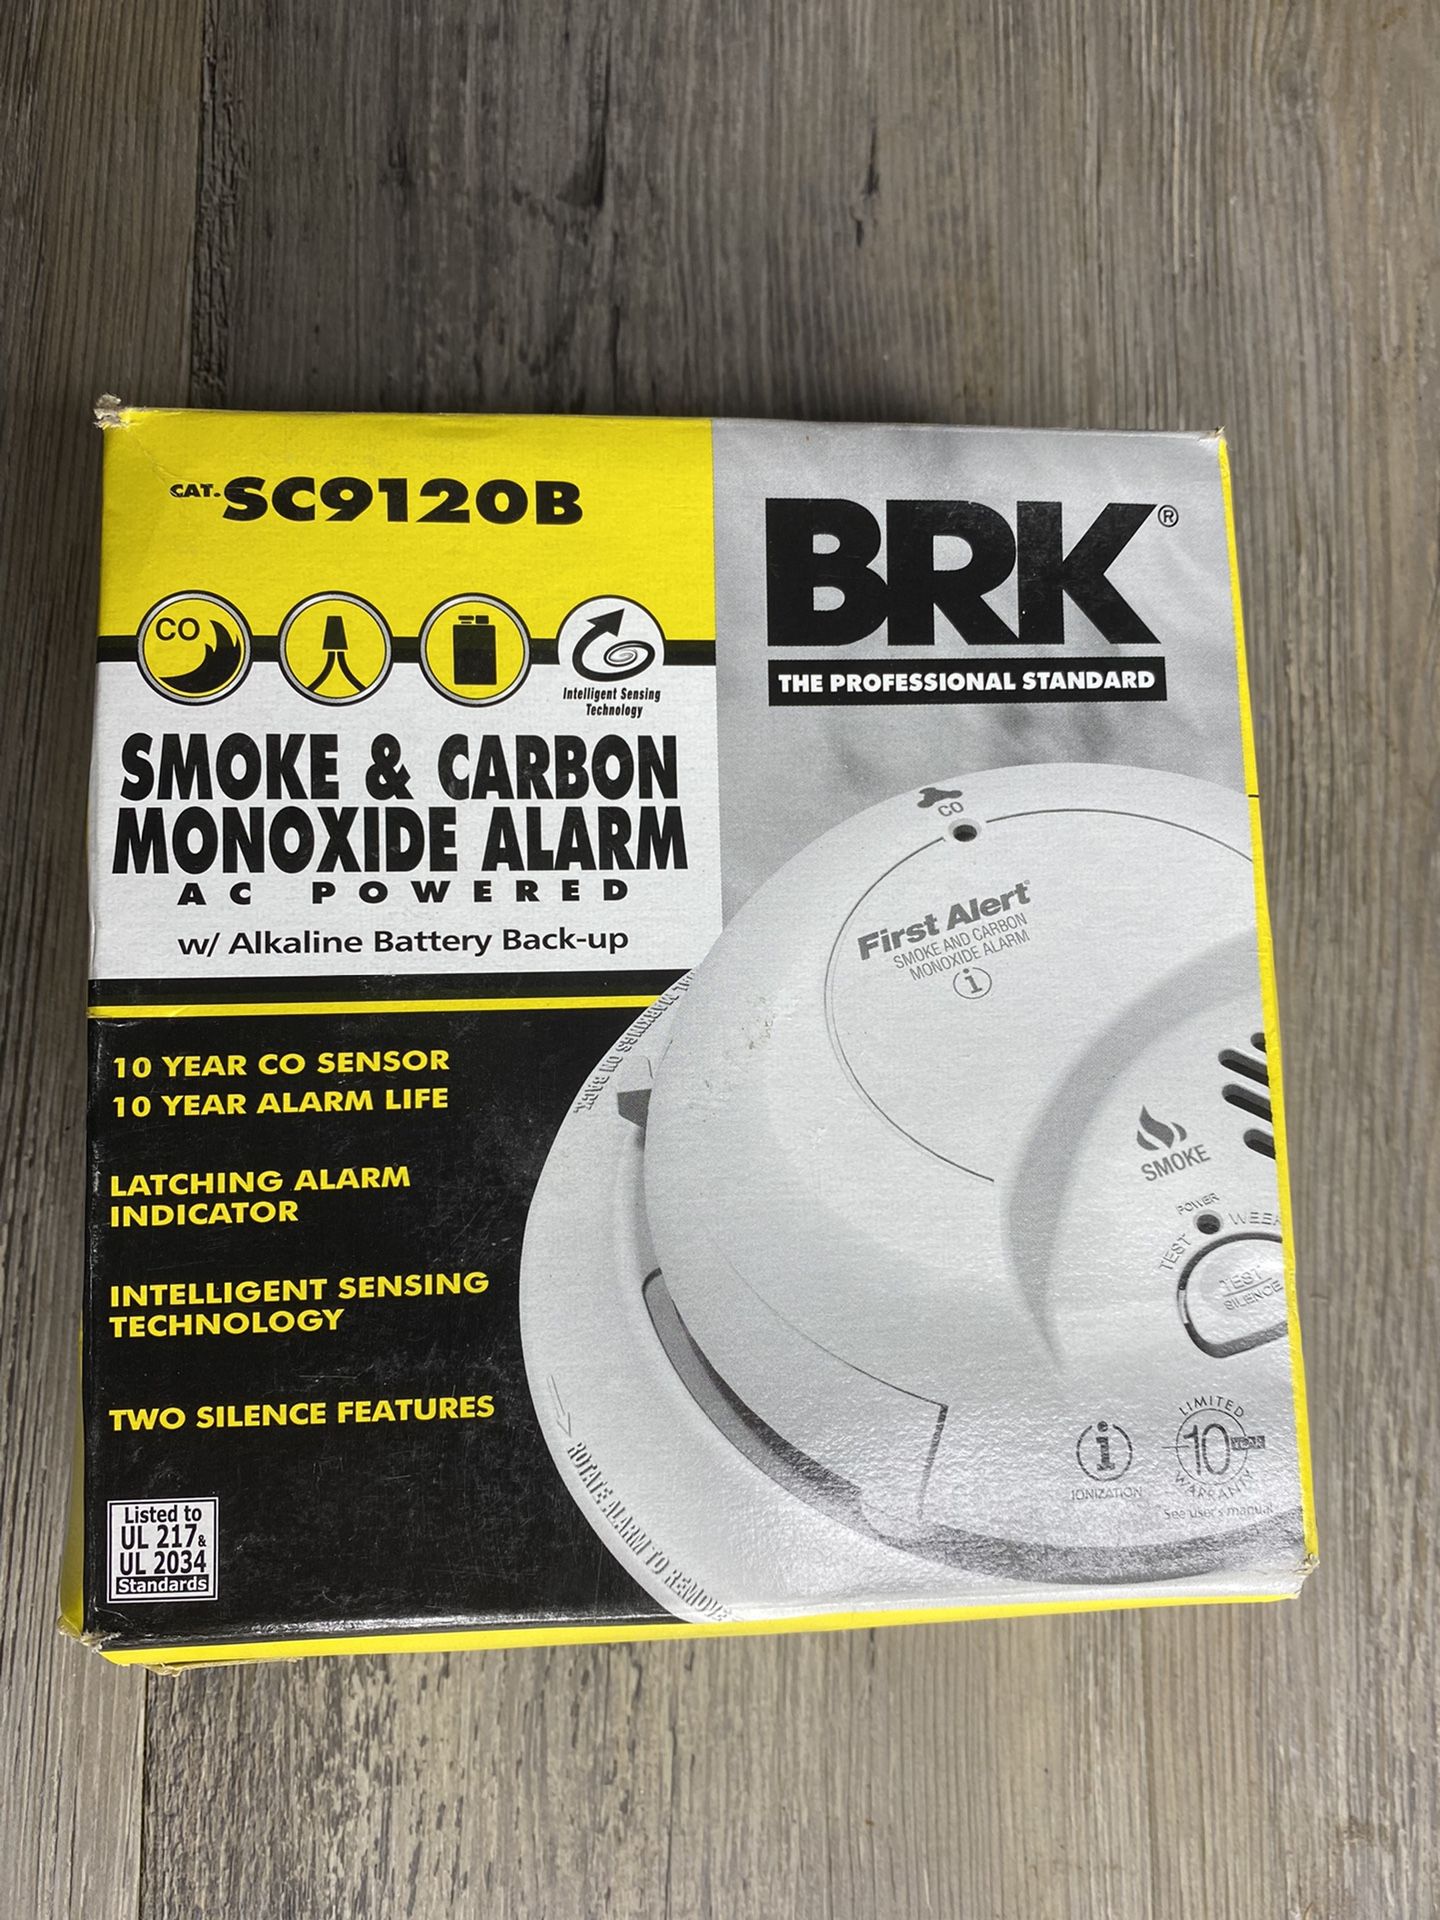 First Alert, BRK SC9120B Hardwire Combination Smoke/Carbon Monoxide Battery Back